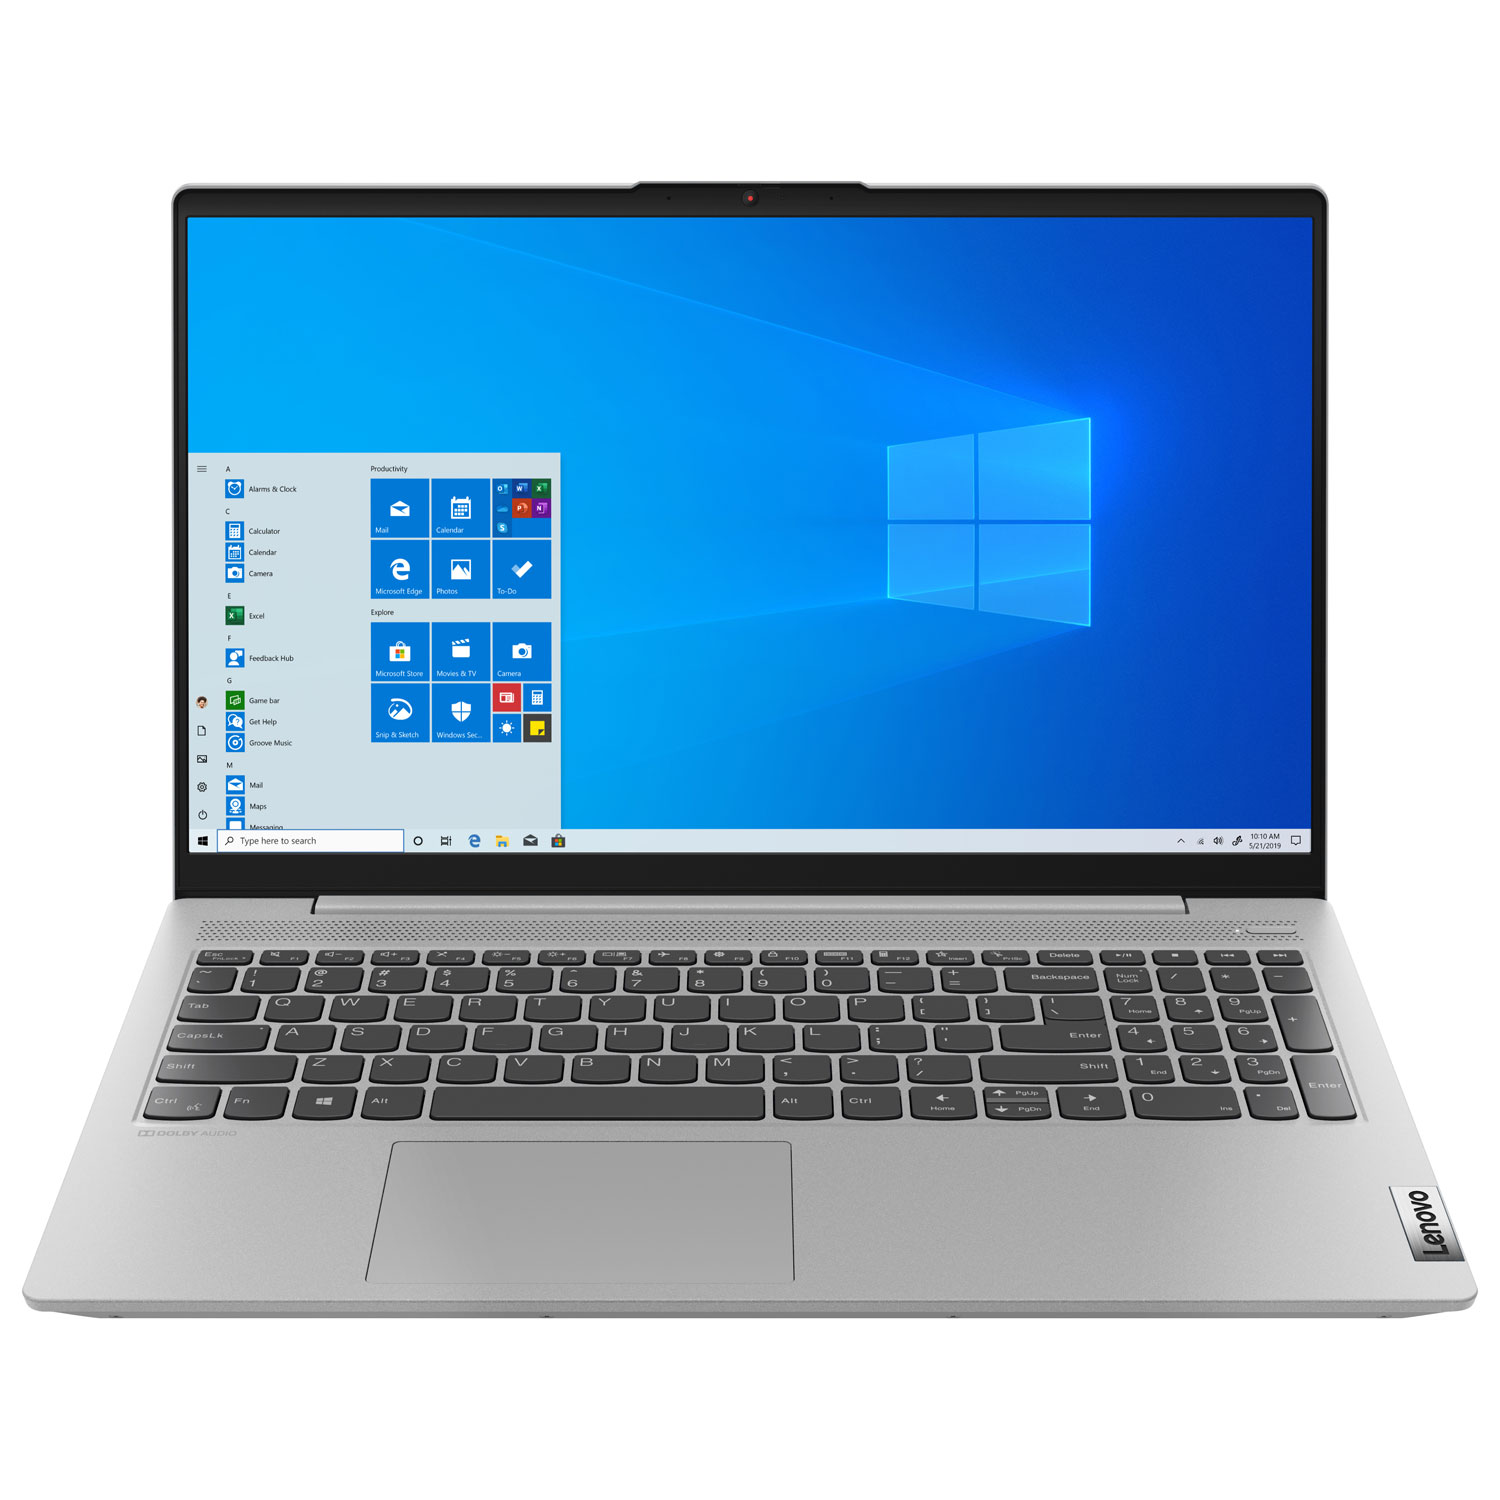 Lenovo IdeaPad 5 15.6" Laptop - Platinum Grey (Intel i7-1065G7/512GB SSD/8GB RAM/Windows 10) - English